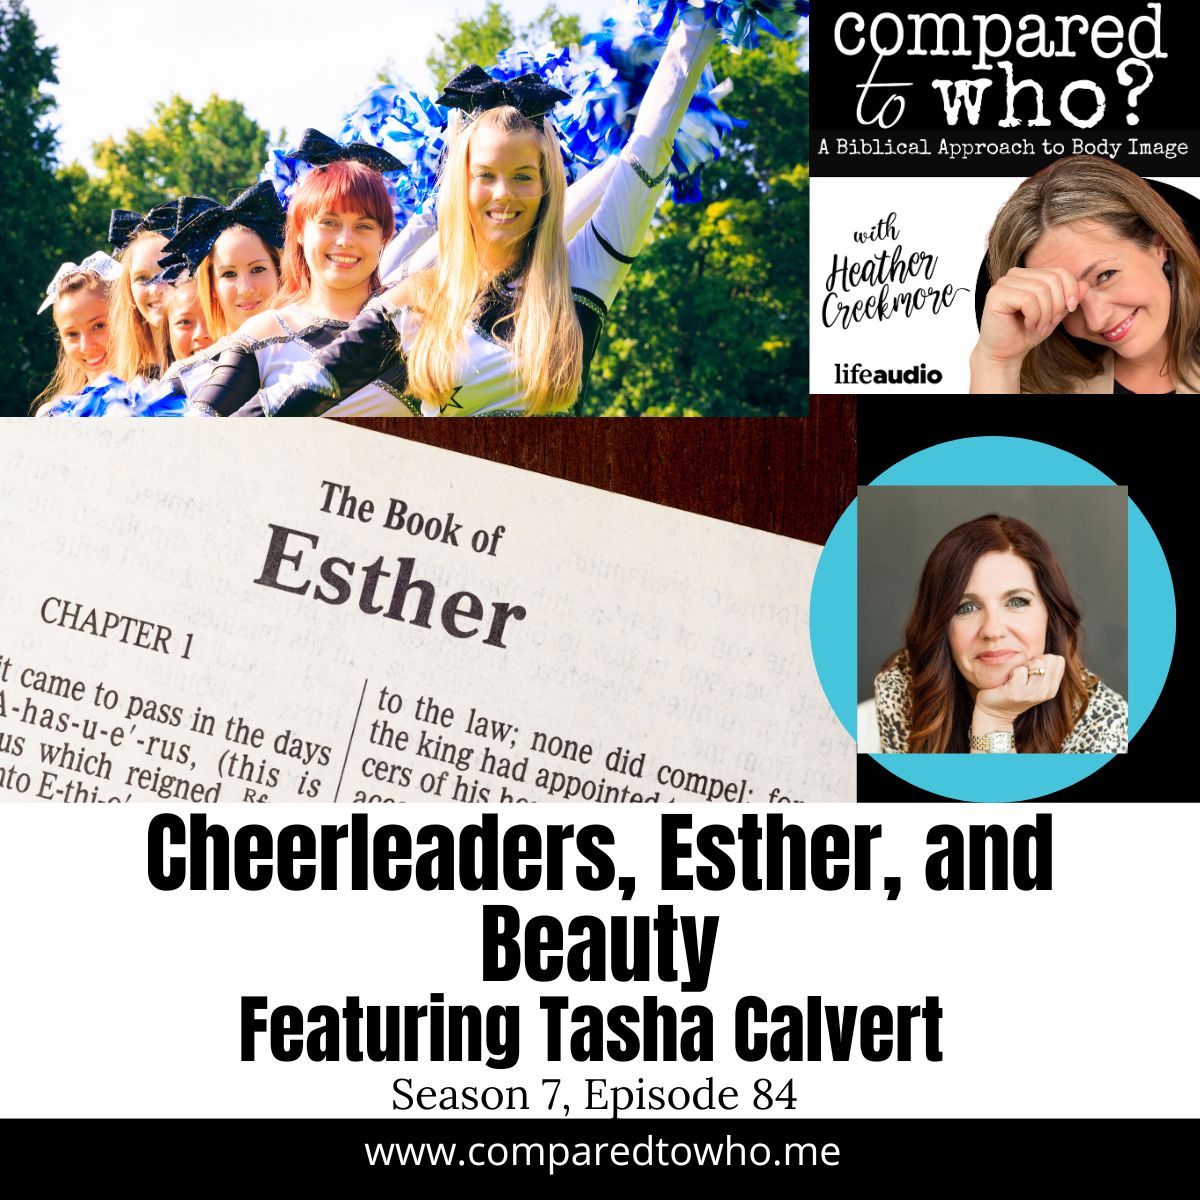 Cheerleaders, Esther, and Beauty Featuring Tasha Calvert